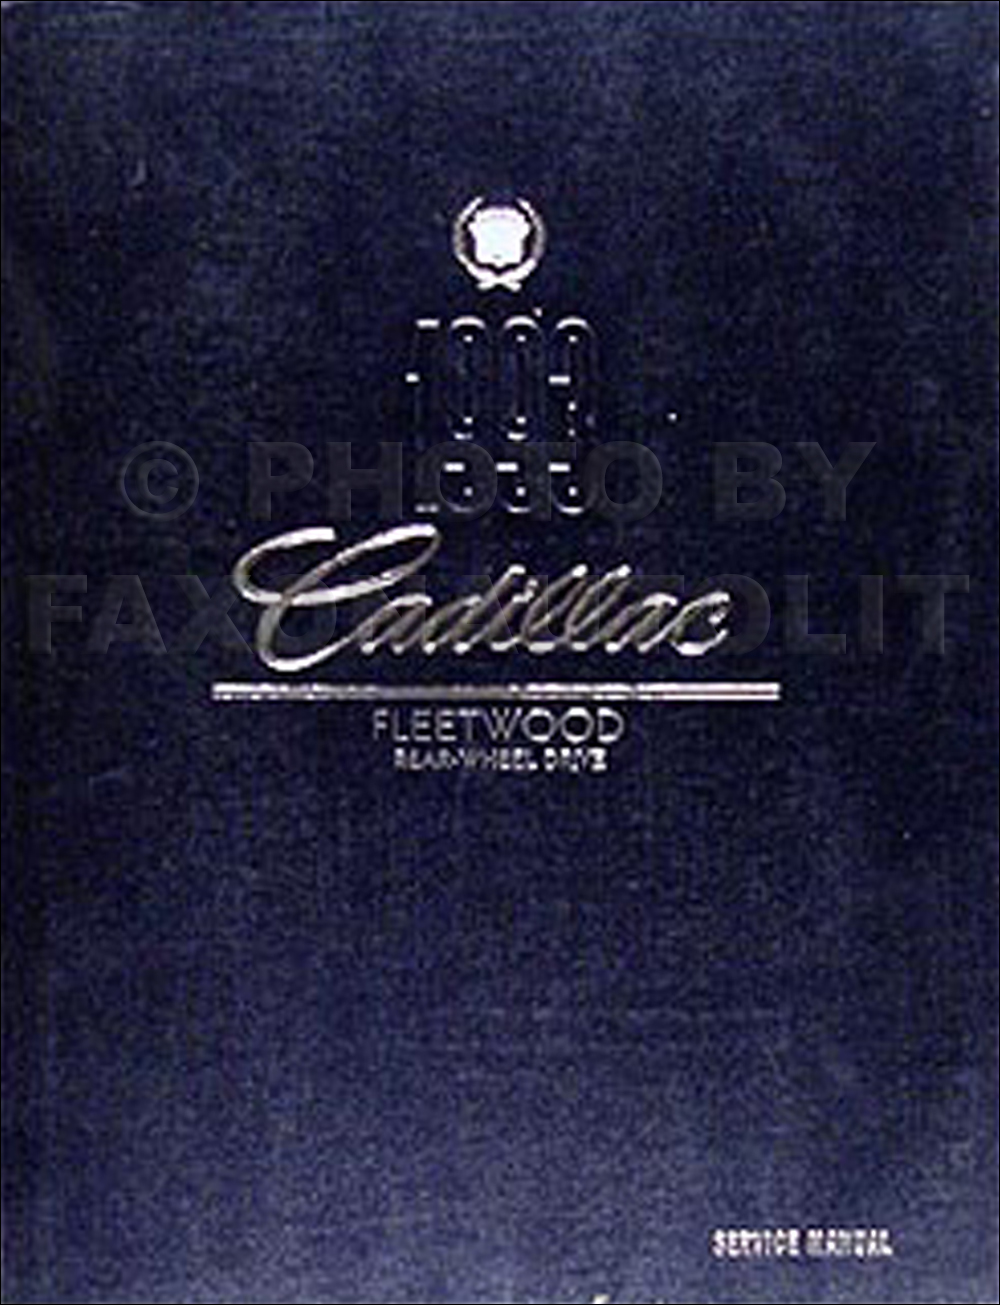 1993 Cadillac Fleetwood RWD and Brougham Shop Manual Original